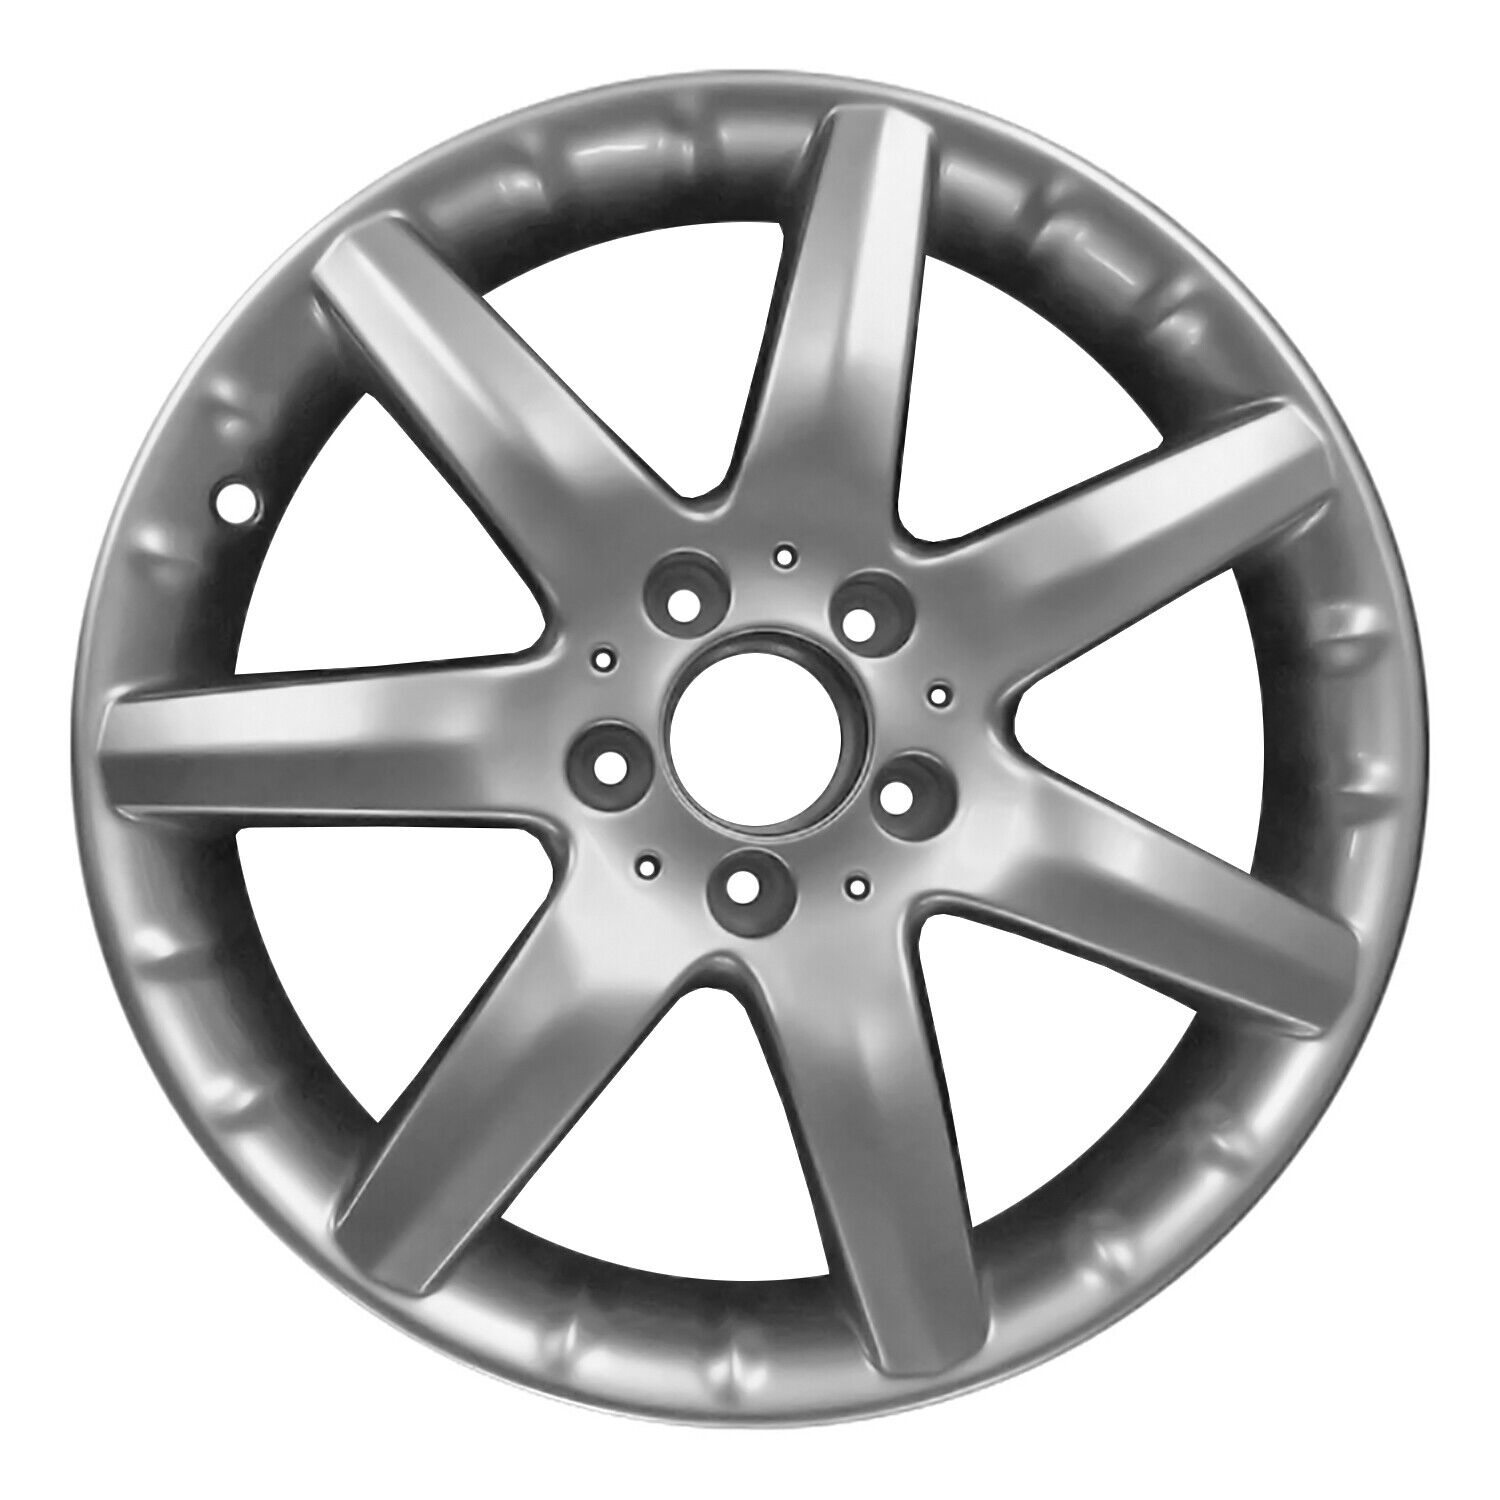 65261 Reconditioned OEM Front Aluminum Wheel 17x7.5 fits 2002-2005 Mercedes C230